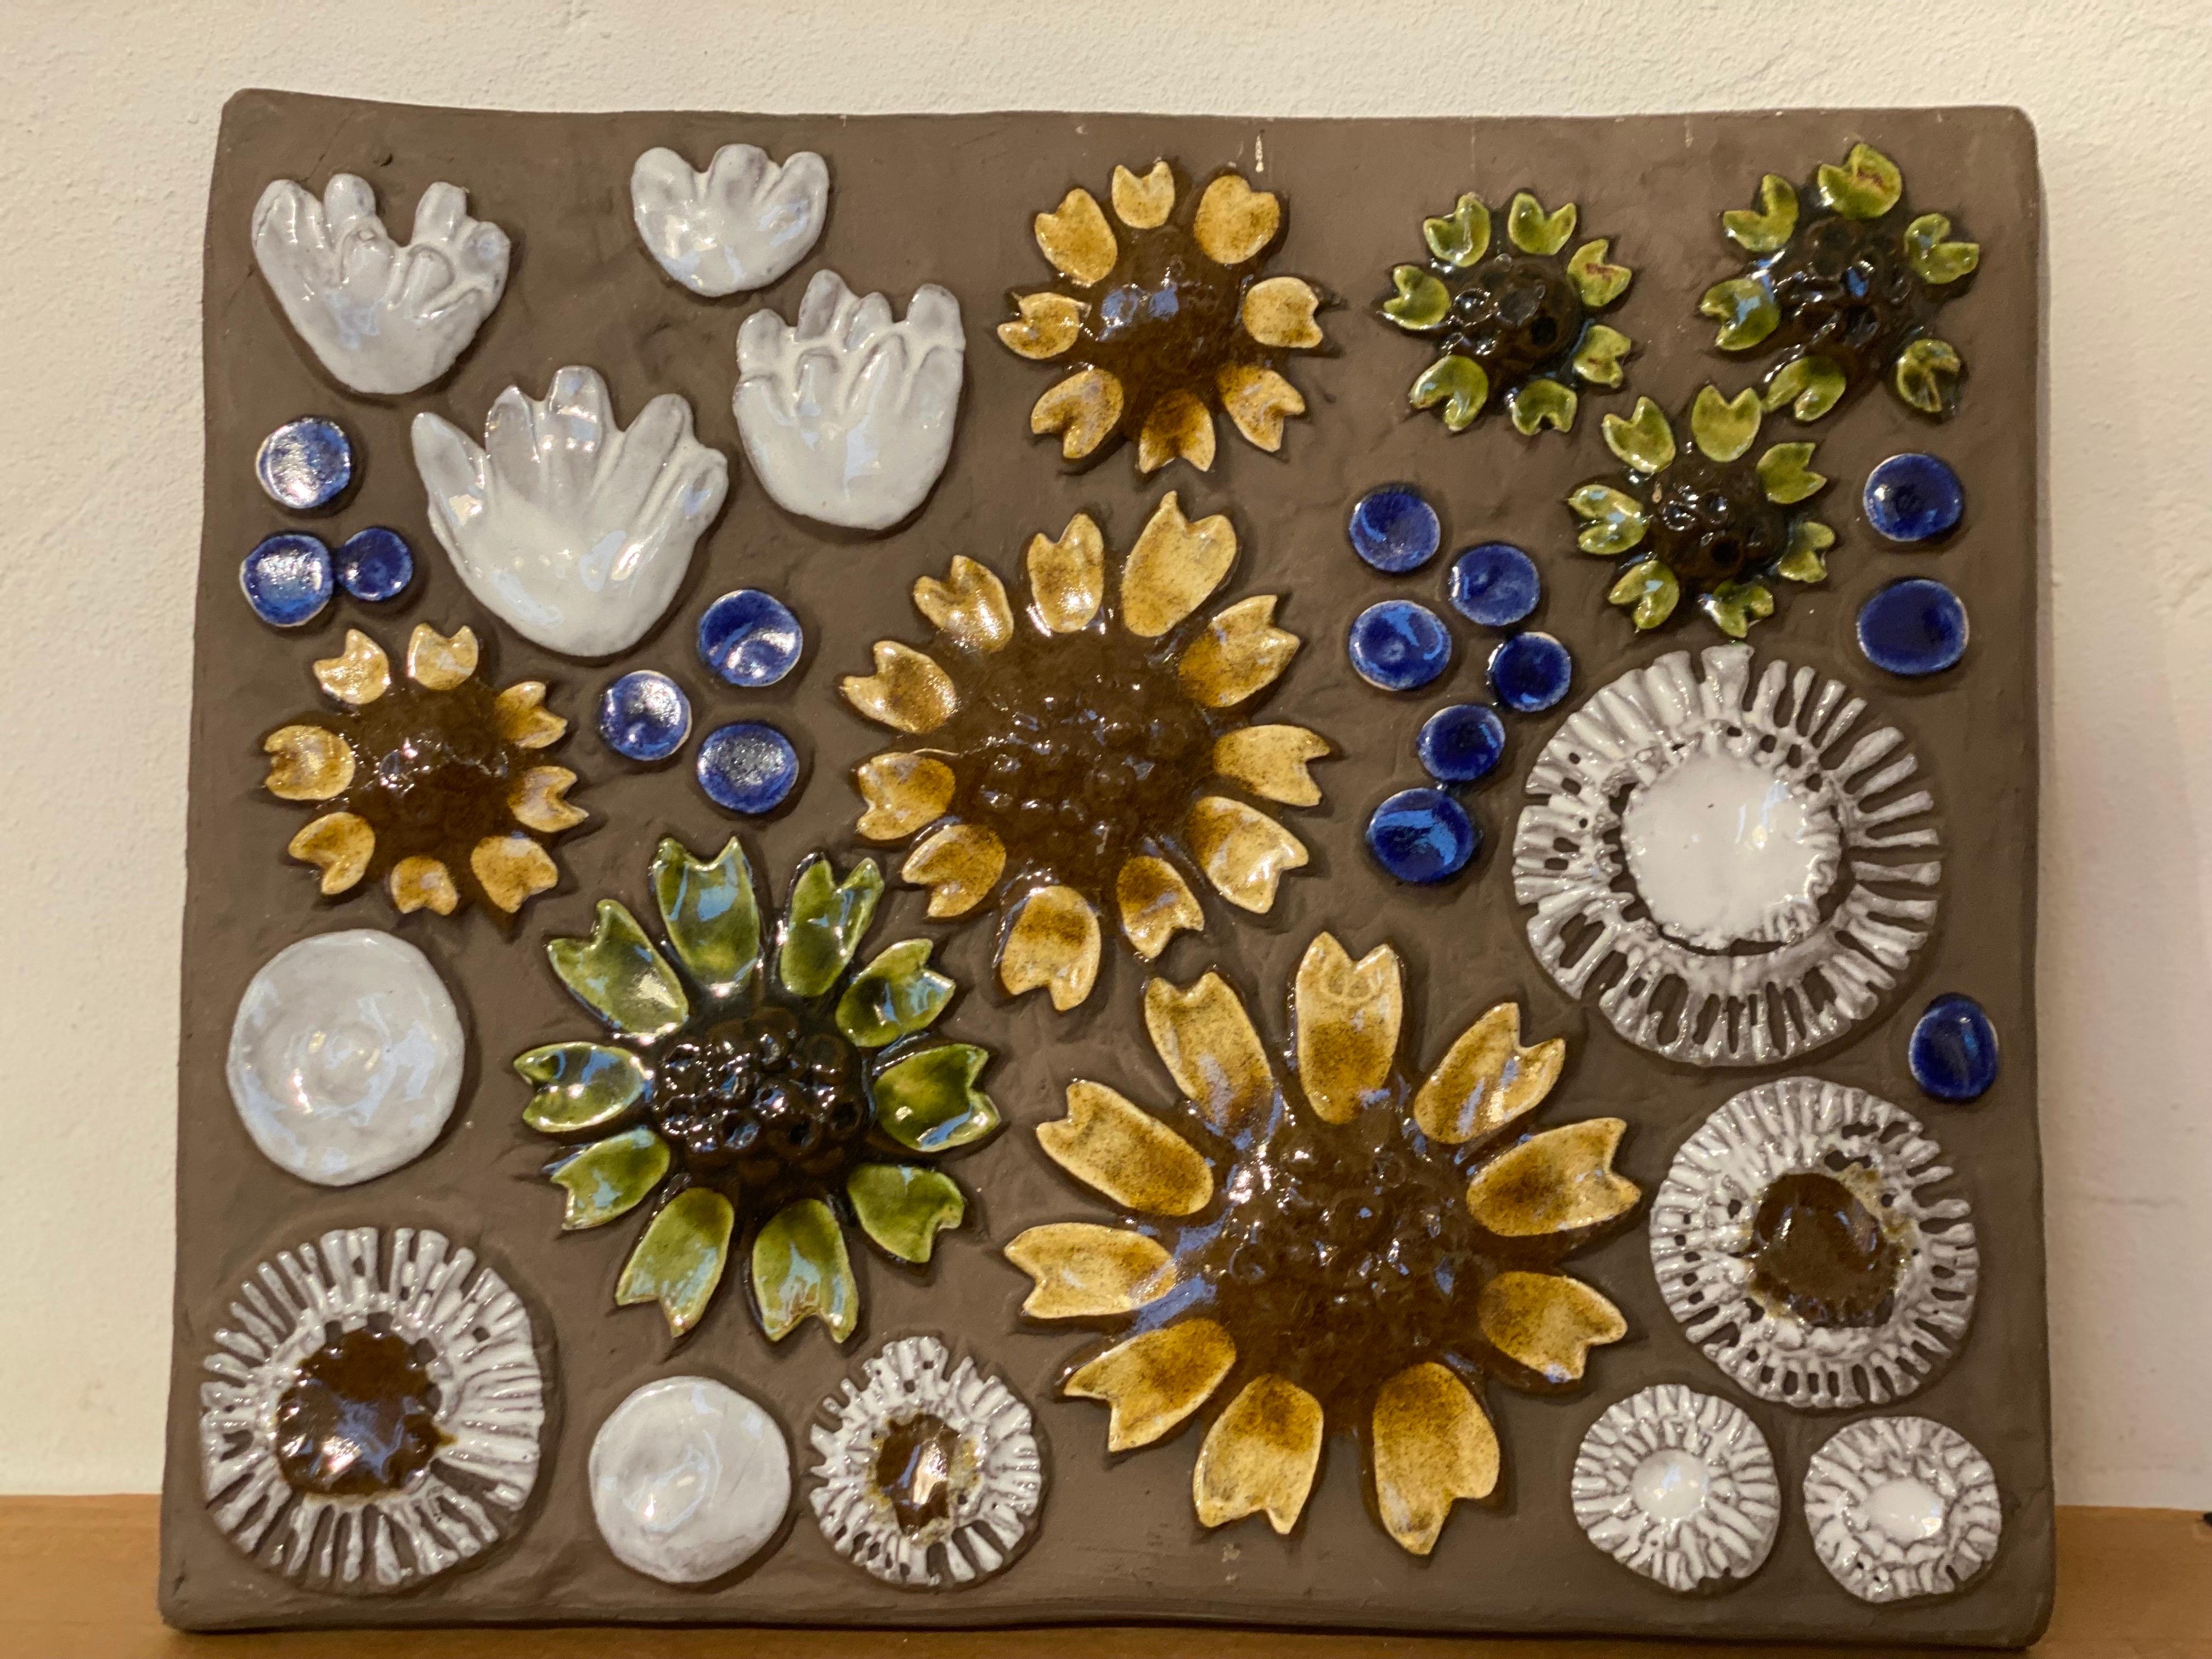 Glazed Ceramic Flower Tile Designed by Aimo Nietosvuori for Jie Gantofta, Sweden